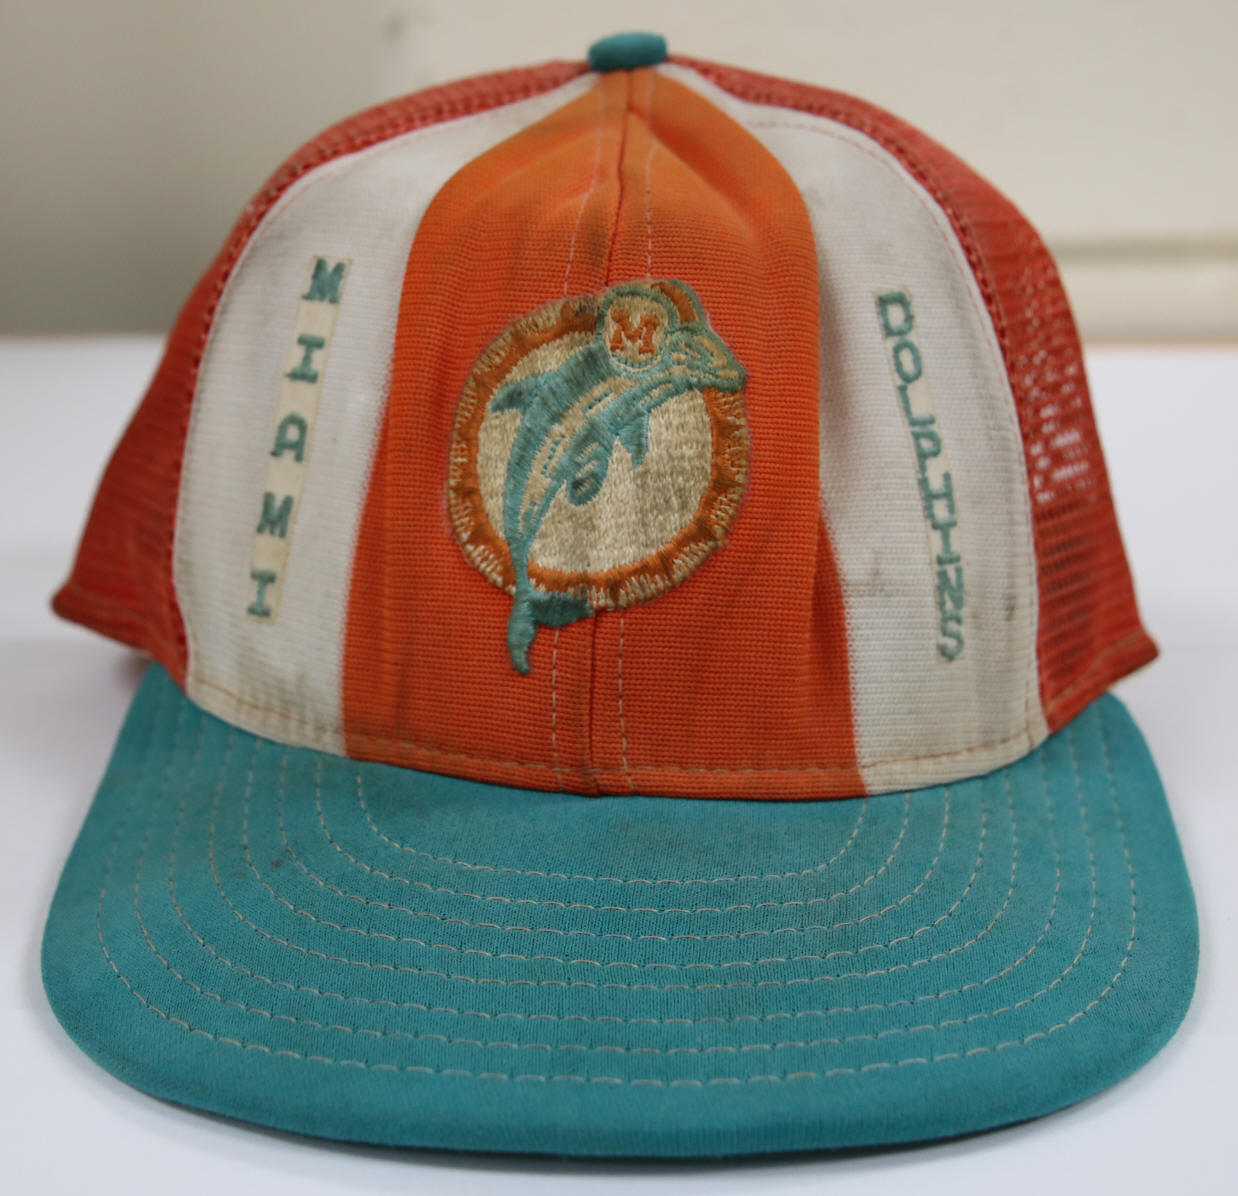 1981-1983 Dolphins cap